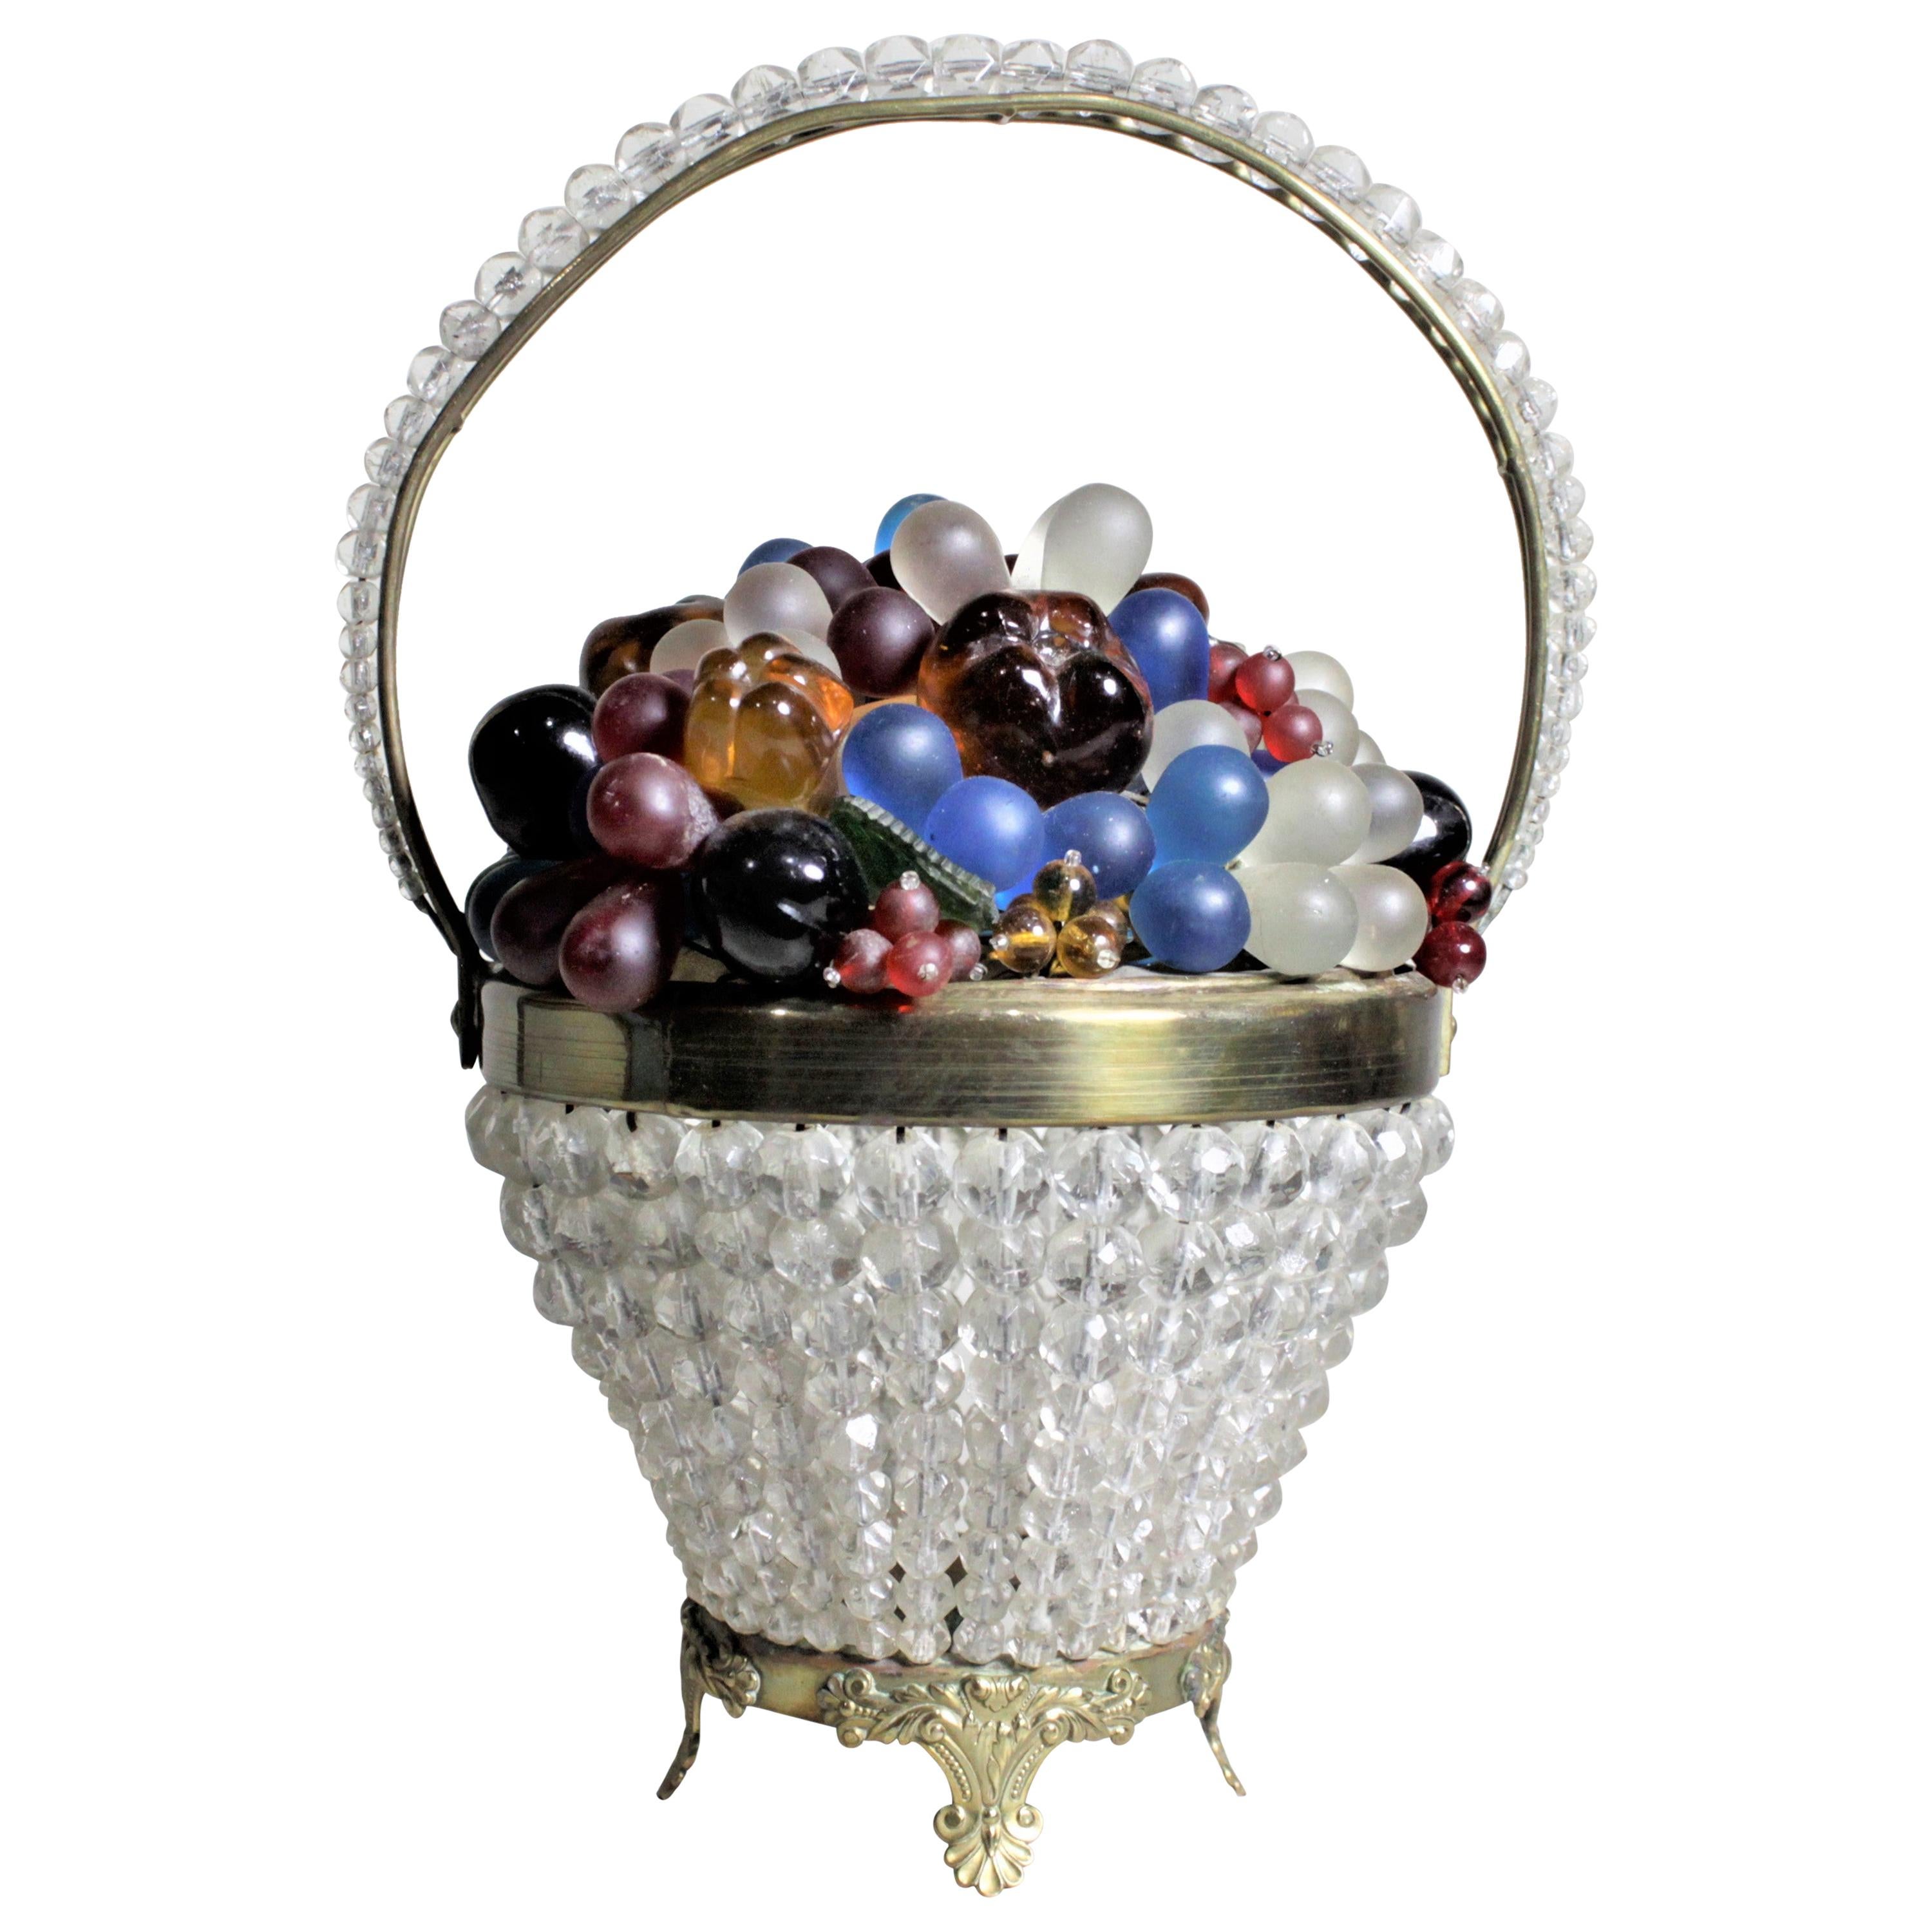 Czech Art Glass Figural Fruit and Flower Basket Lamp or Accent Light